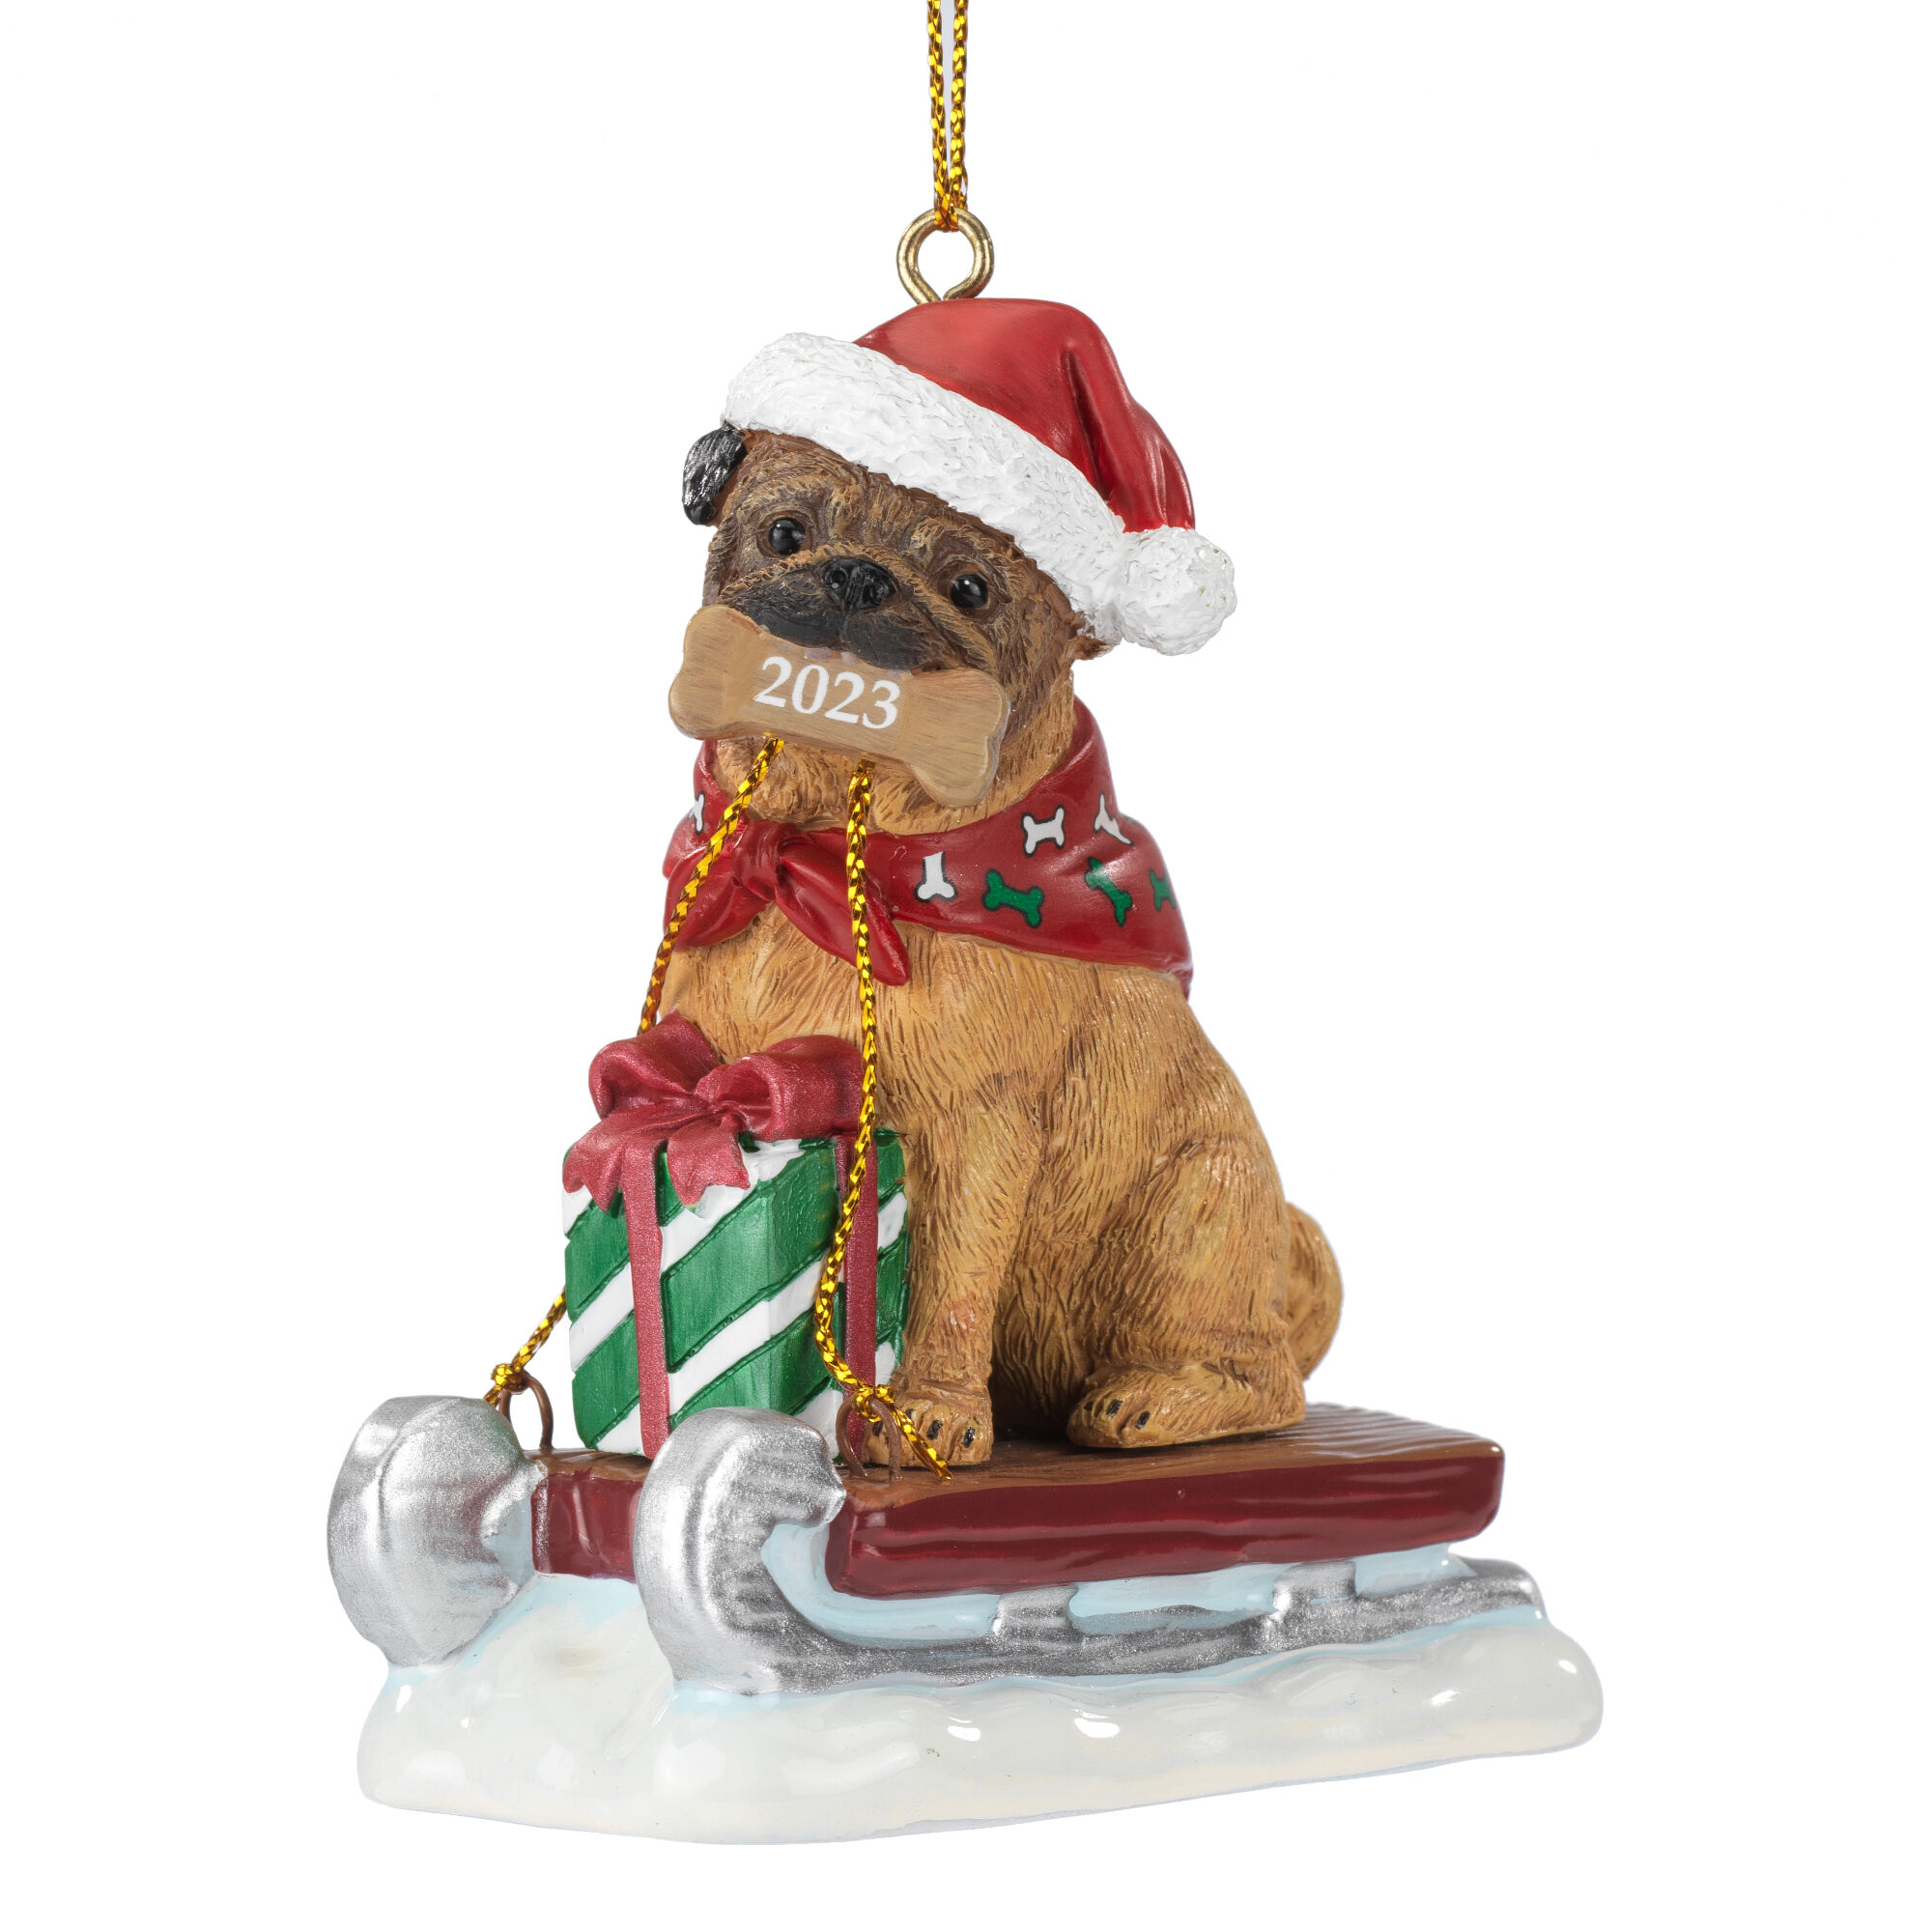 Pug Dog Holding a Christmas Present Ornament